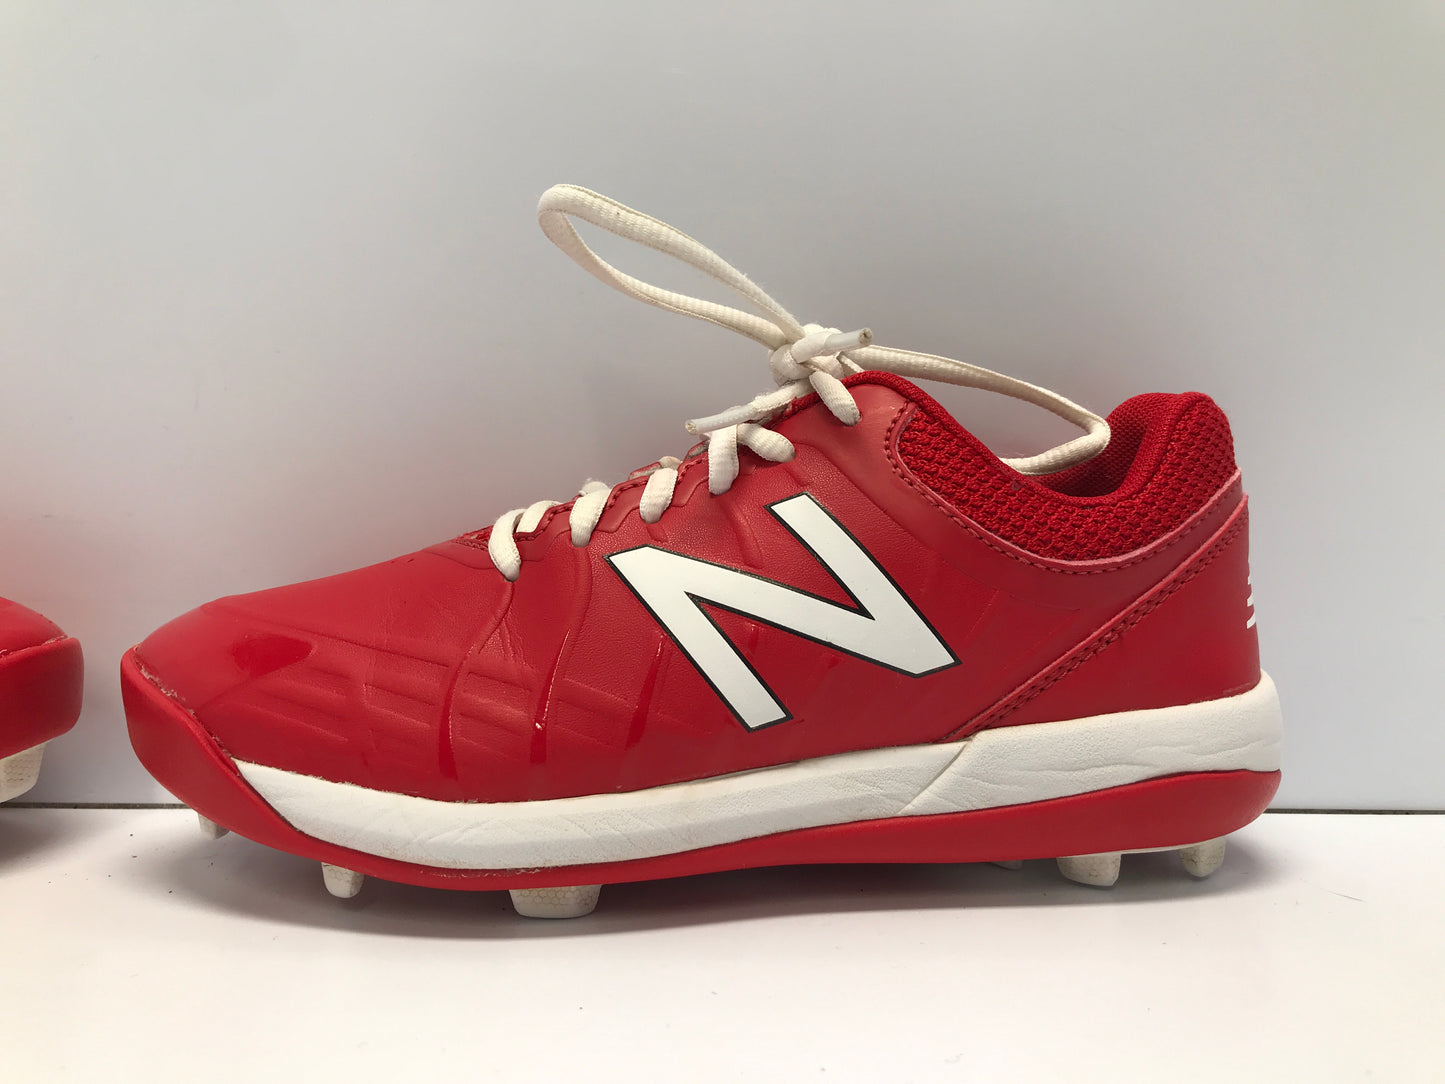 Baseball Shoes Cleats Child Size 3 New Balance Red White Like New